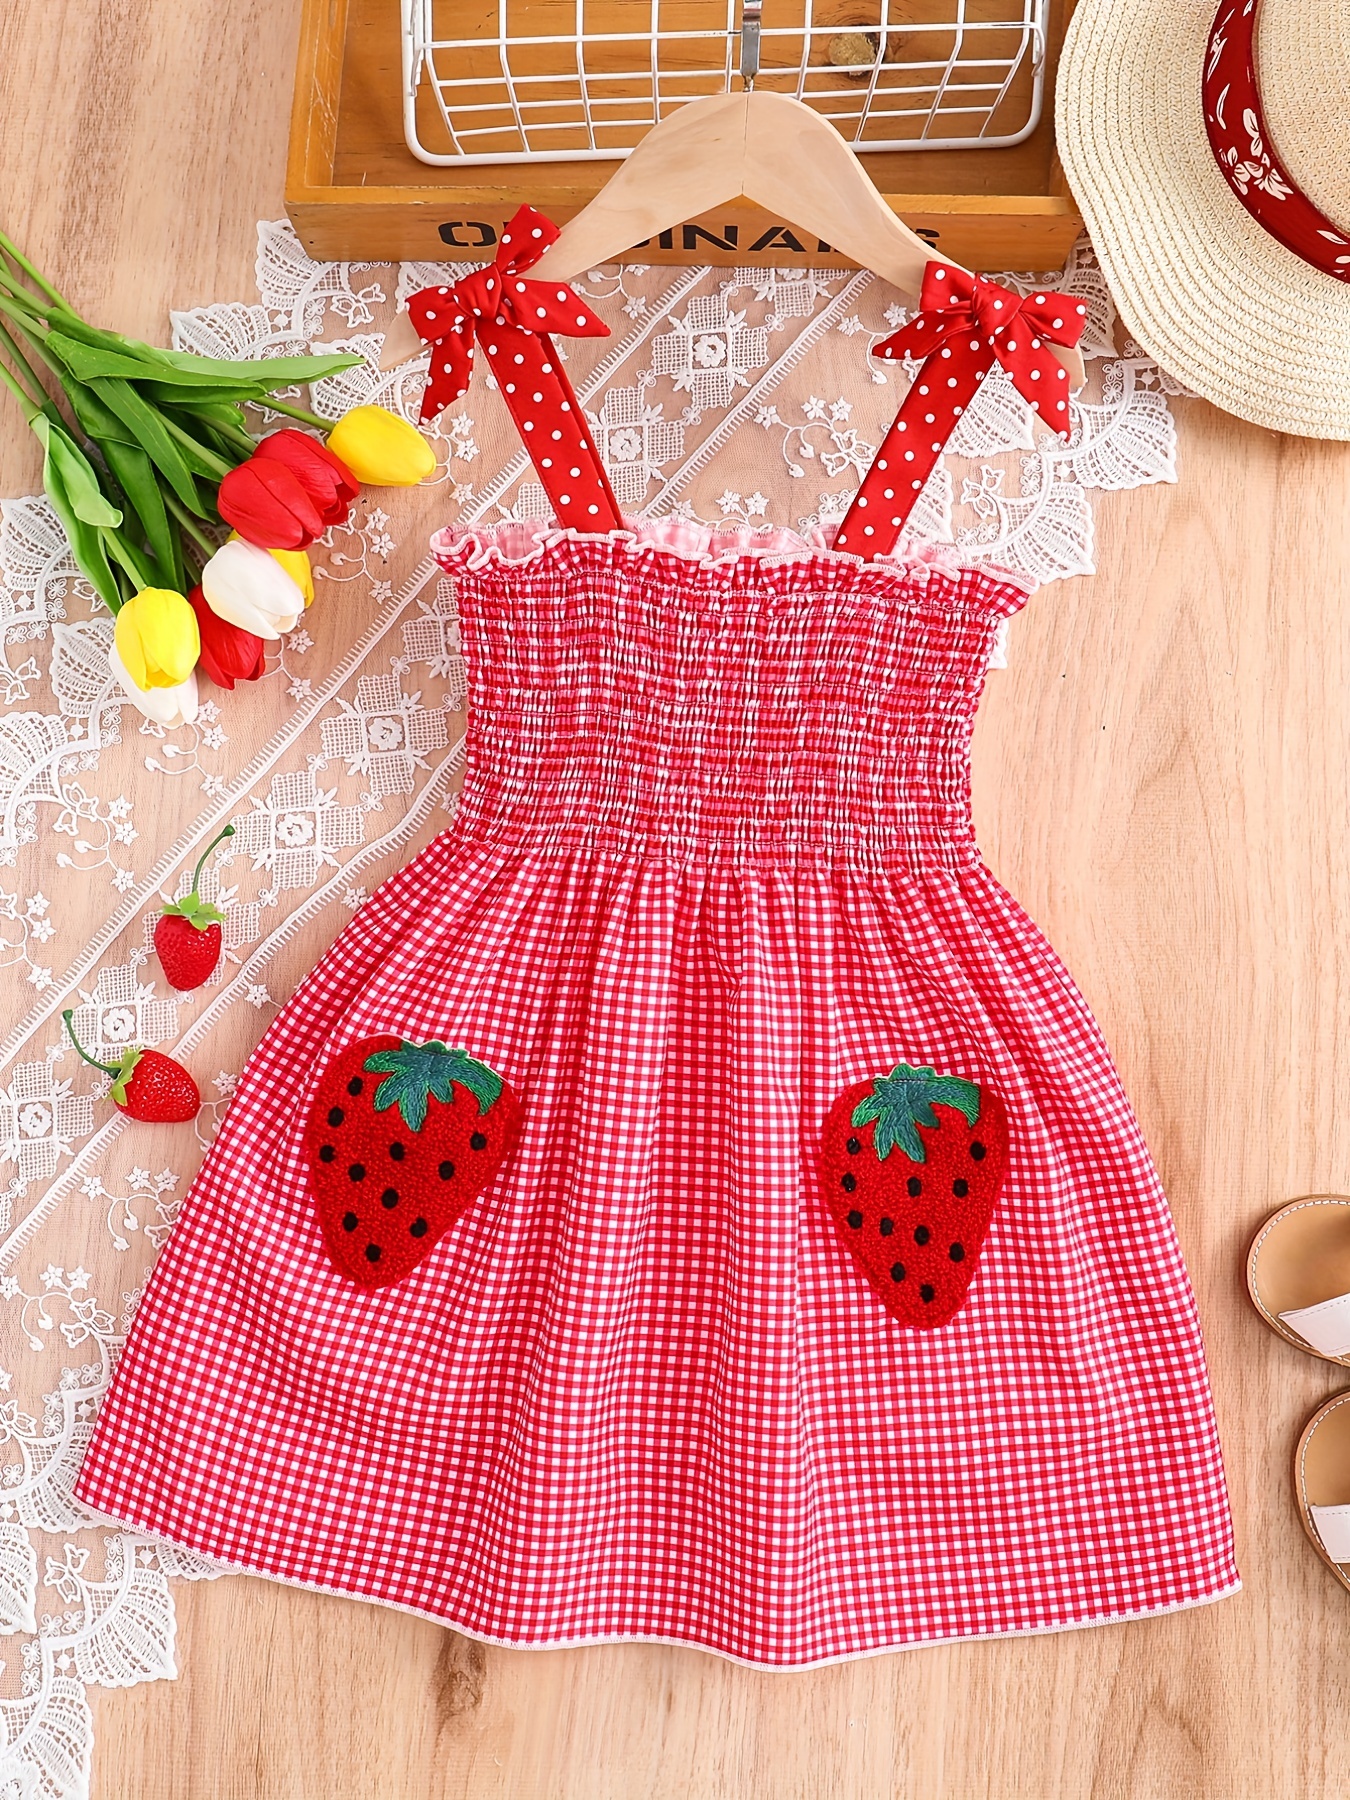 Melon dress,Melon birthday outfit, Melon birthday dress baby girl, Pink  dress 